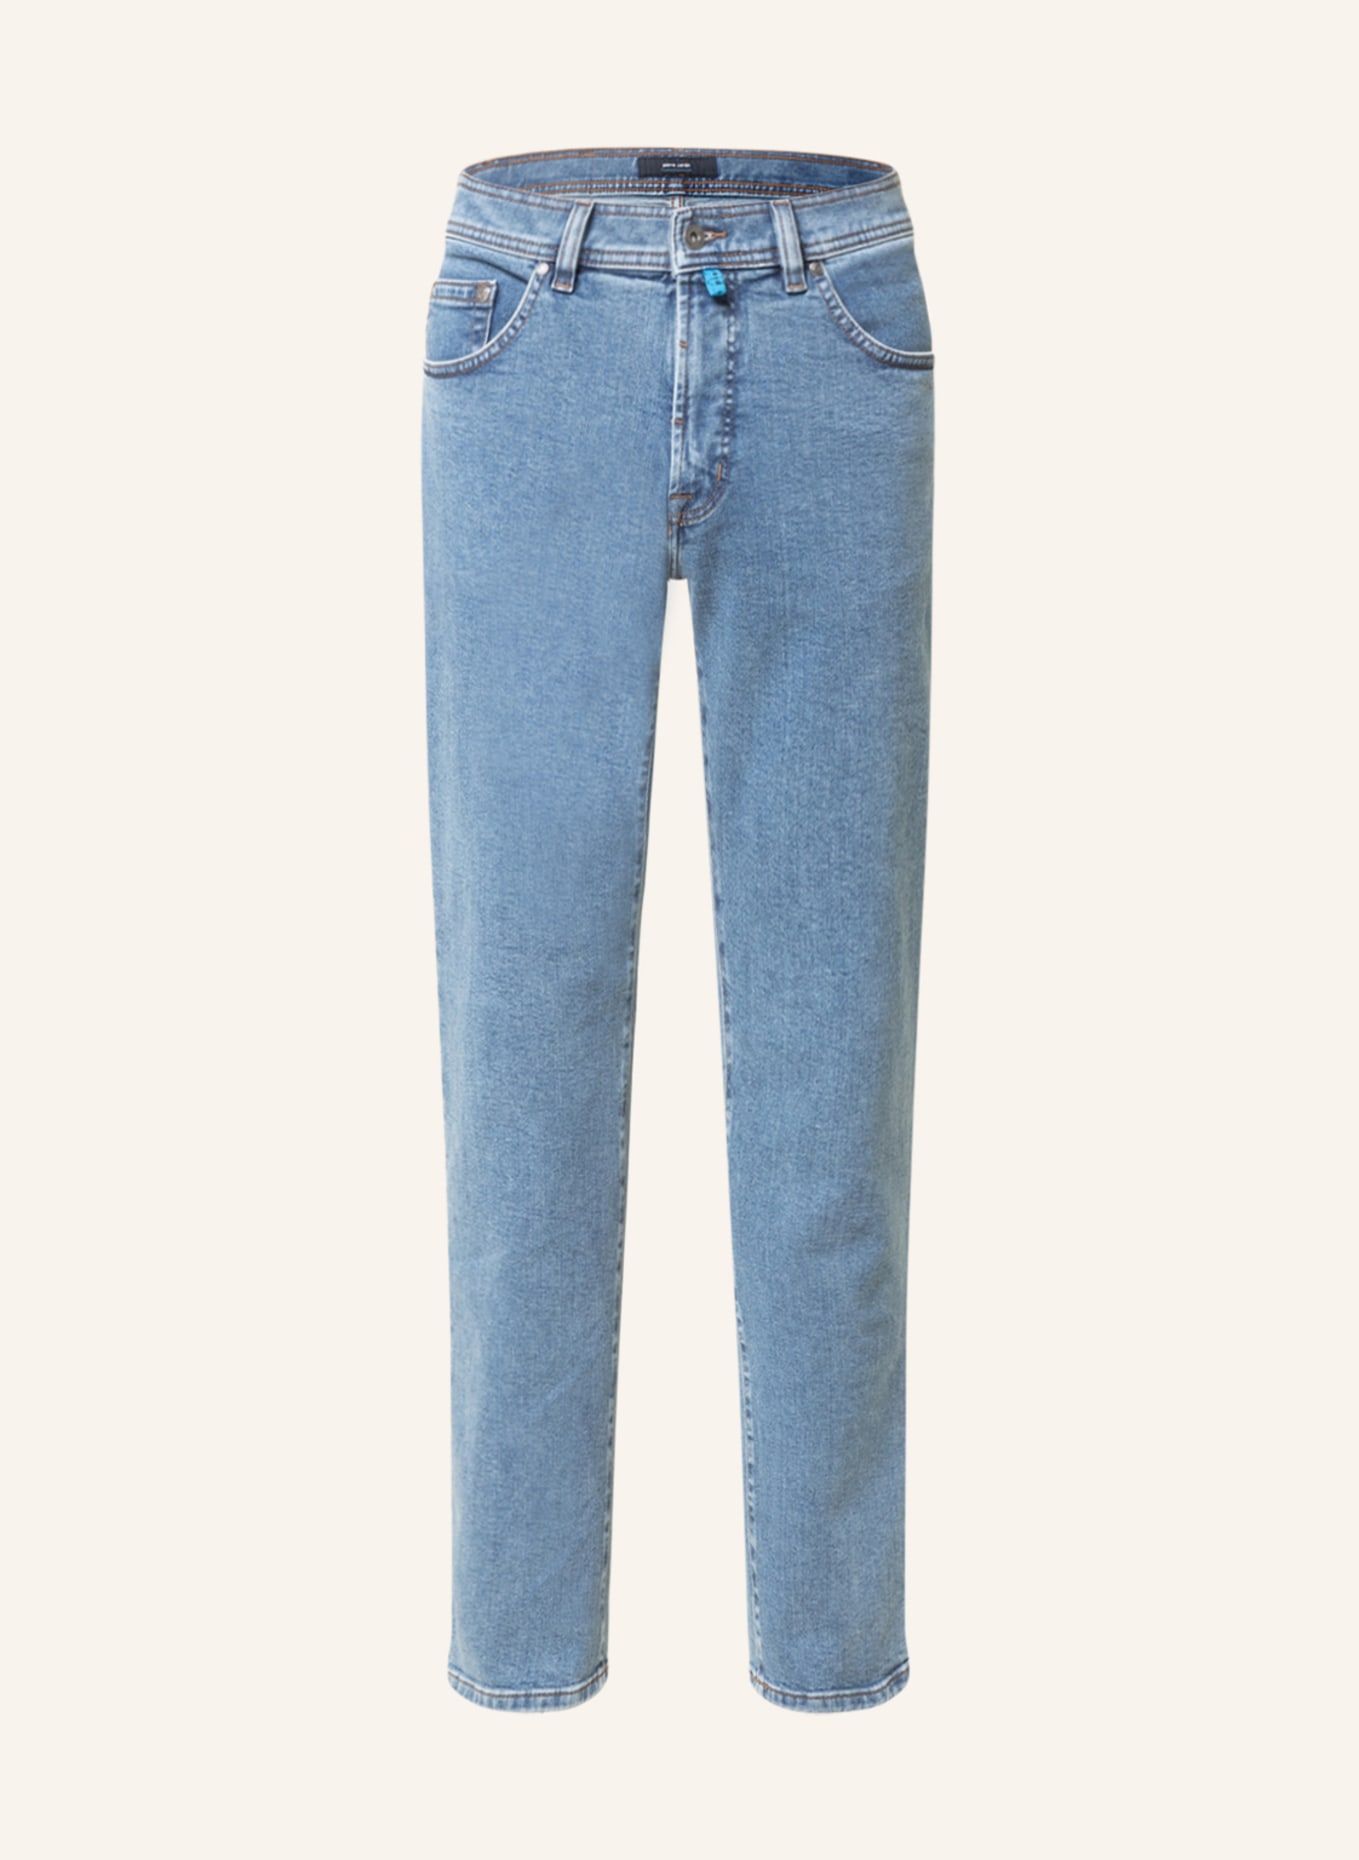 pierre cardin Jeans DIJON Comfort Fit, Farbe: 6812 dark blue used (Bild 1)